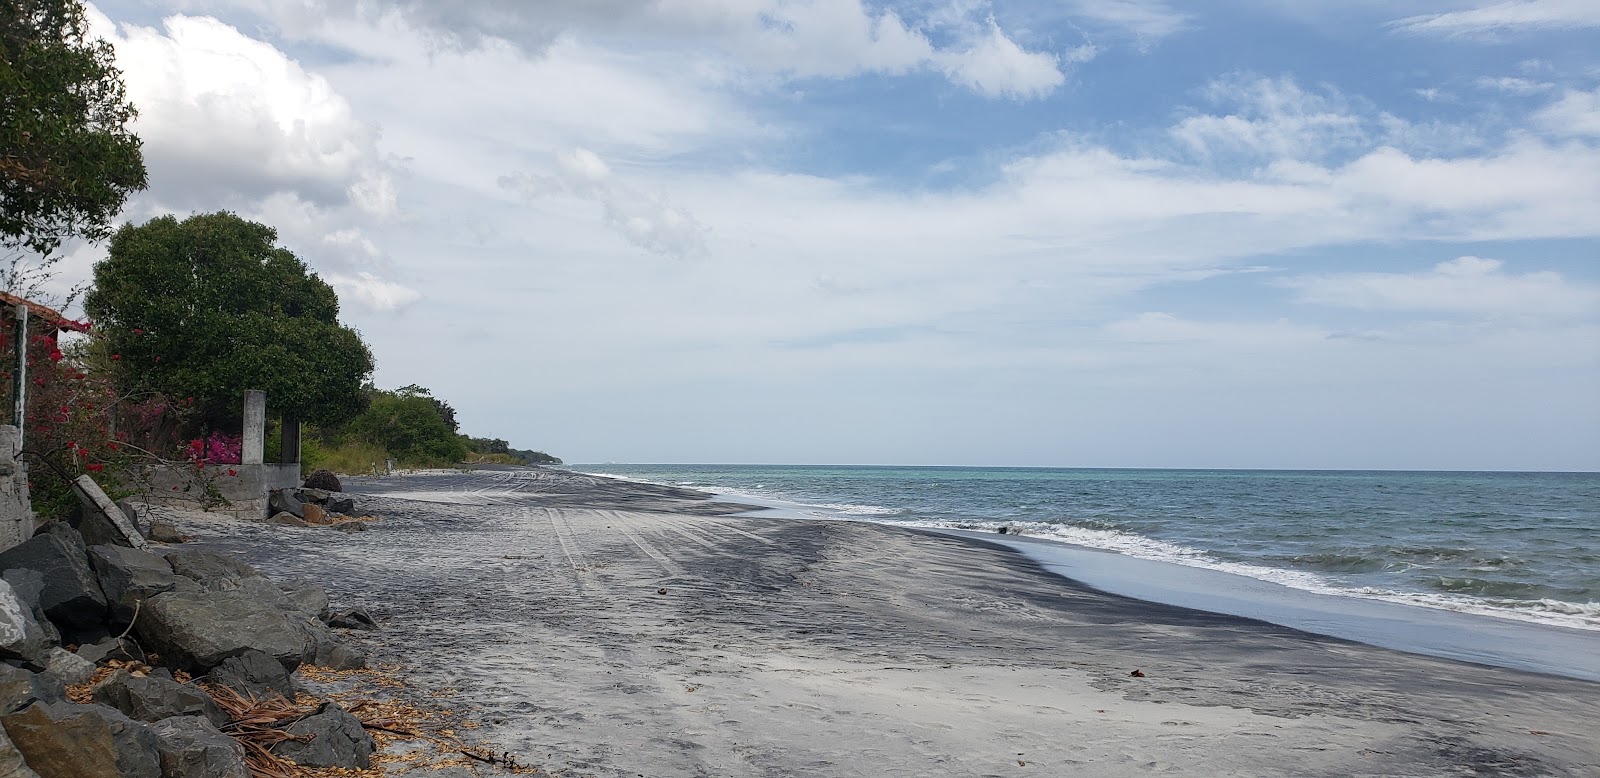 Foto av Juan Hombron Beach med grå sand yta